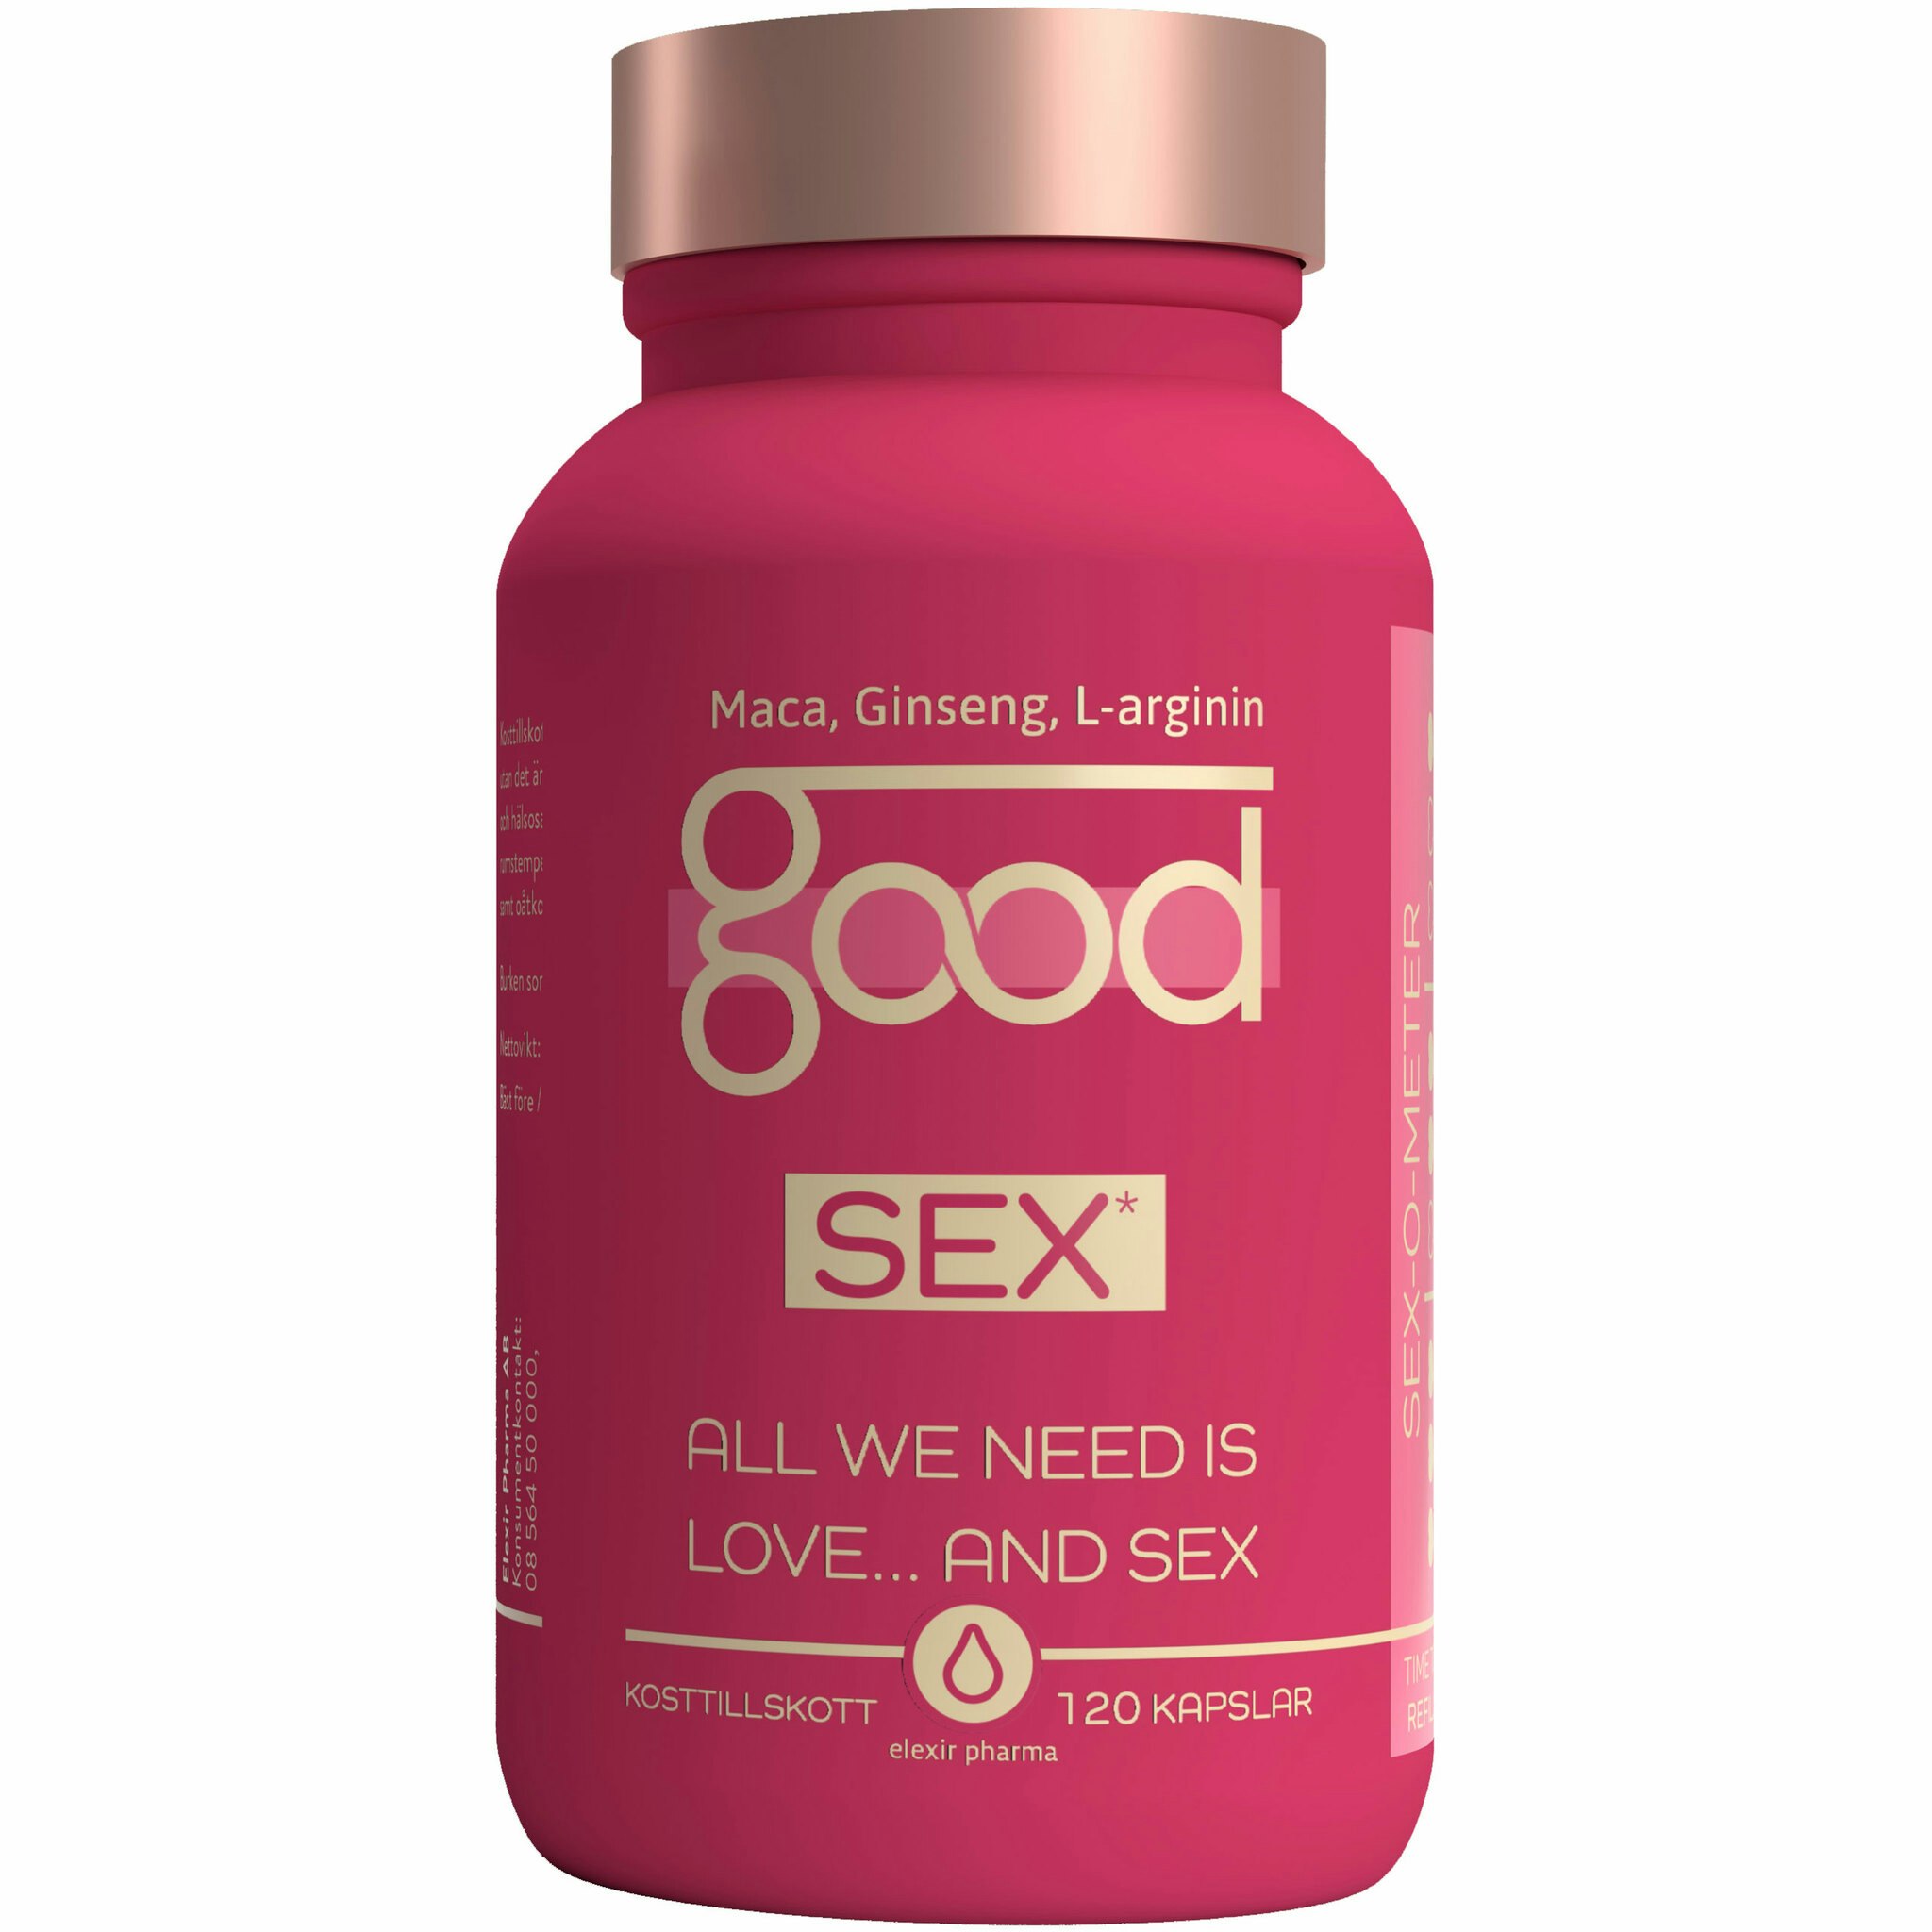 Elexir Pharma Good Sex - 120 capsules